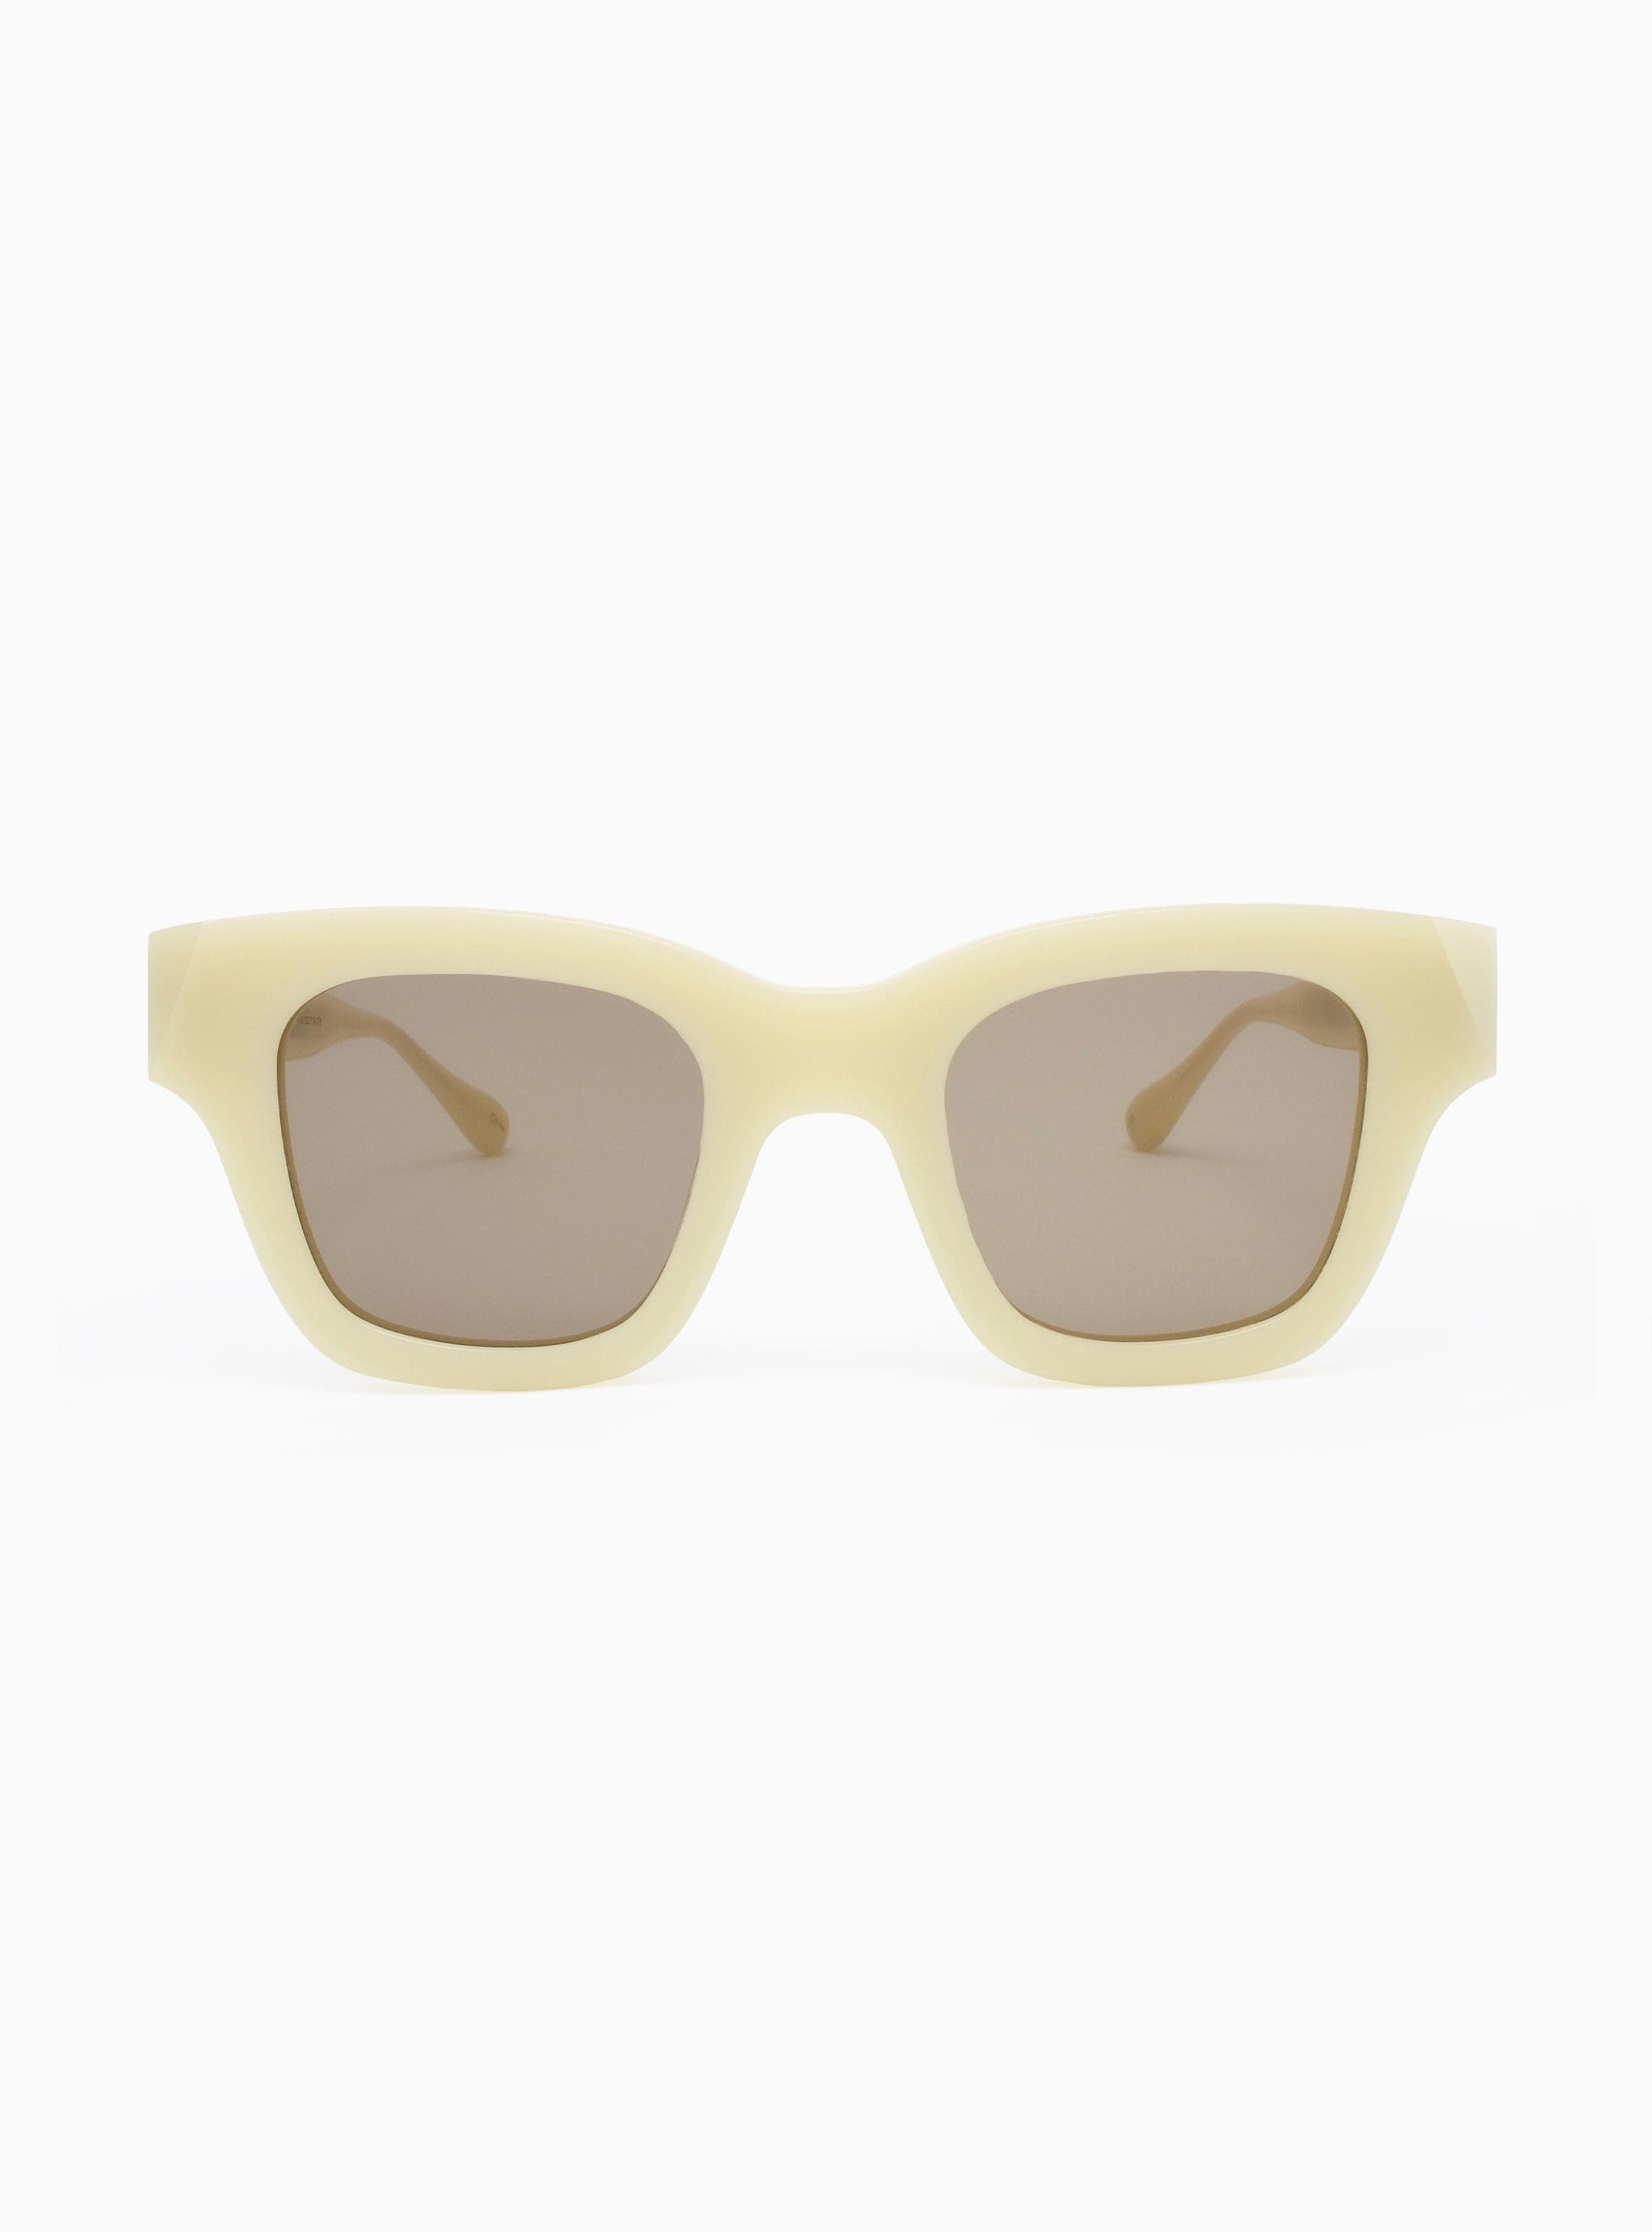 Luxury sunglasses // Aperçu Eyewear Essentials // Fashion sunglasses ...